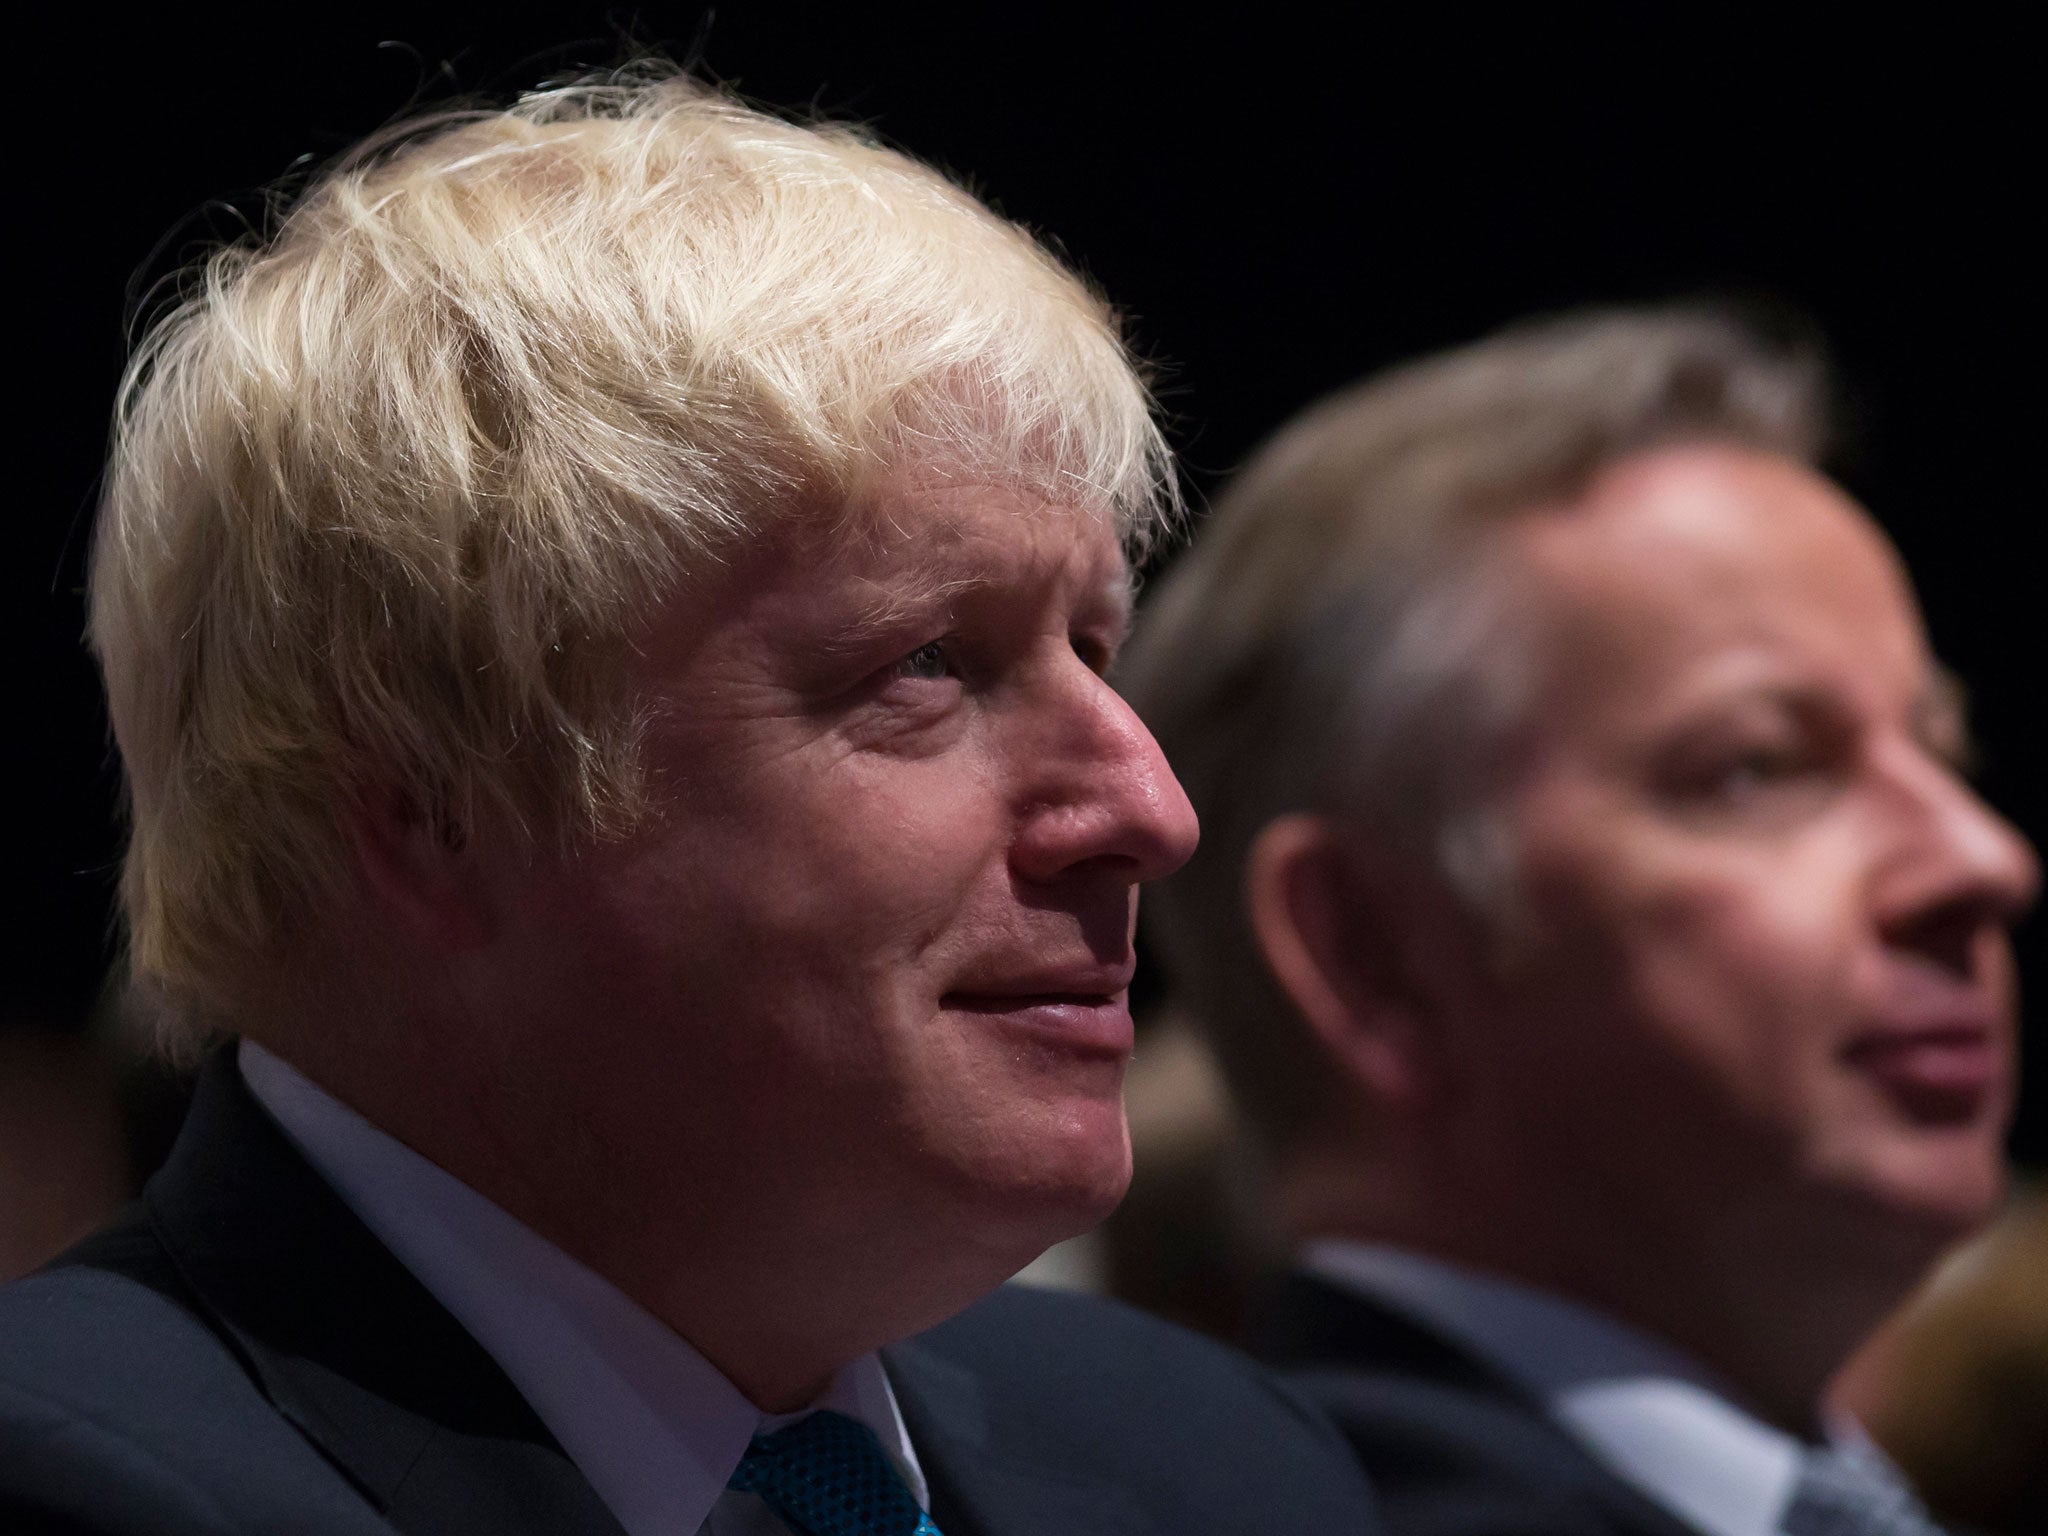 Boris Johnson has said Britain should vote to leave the European Union